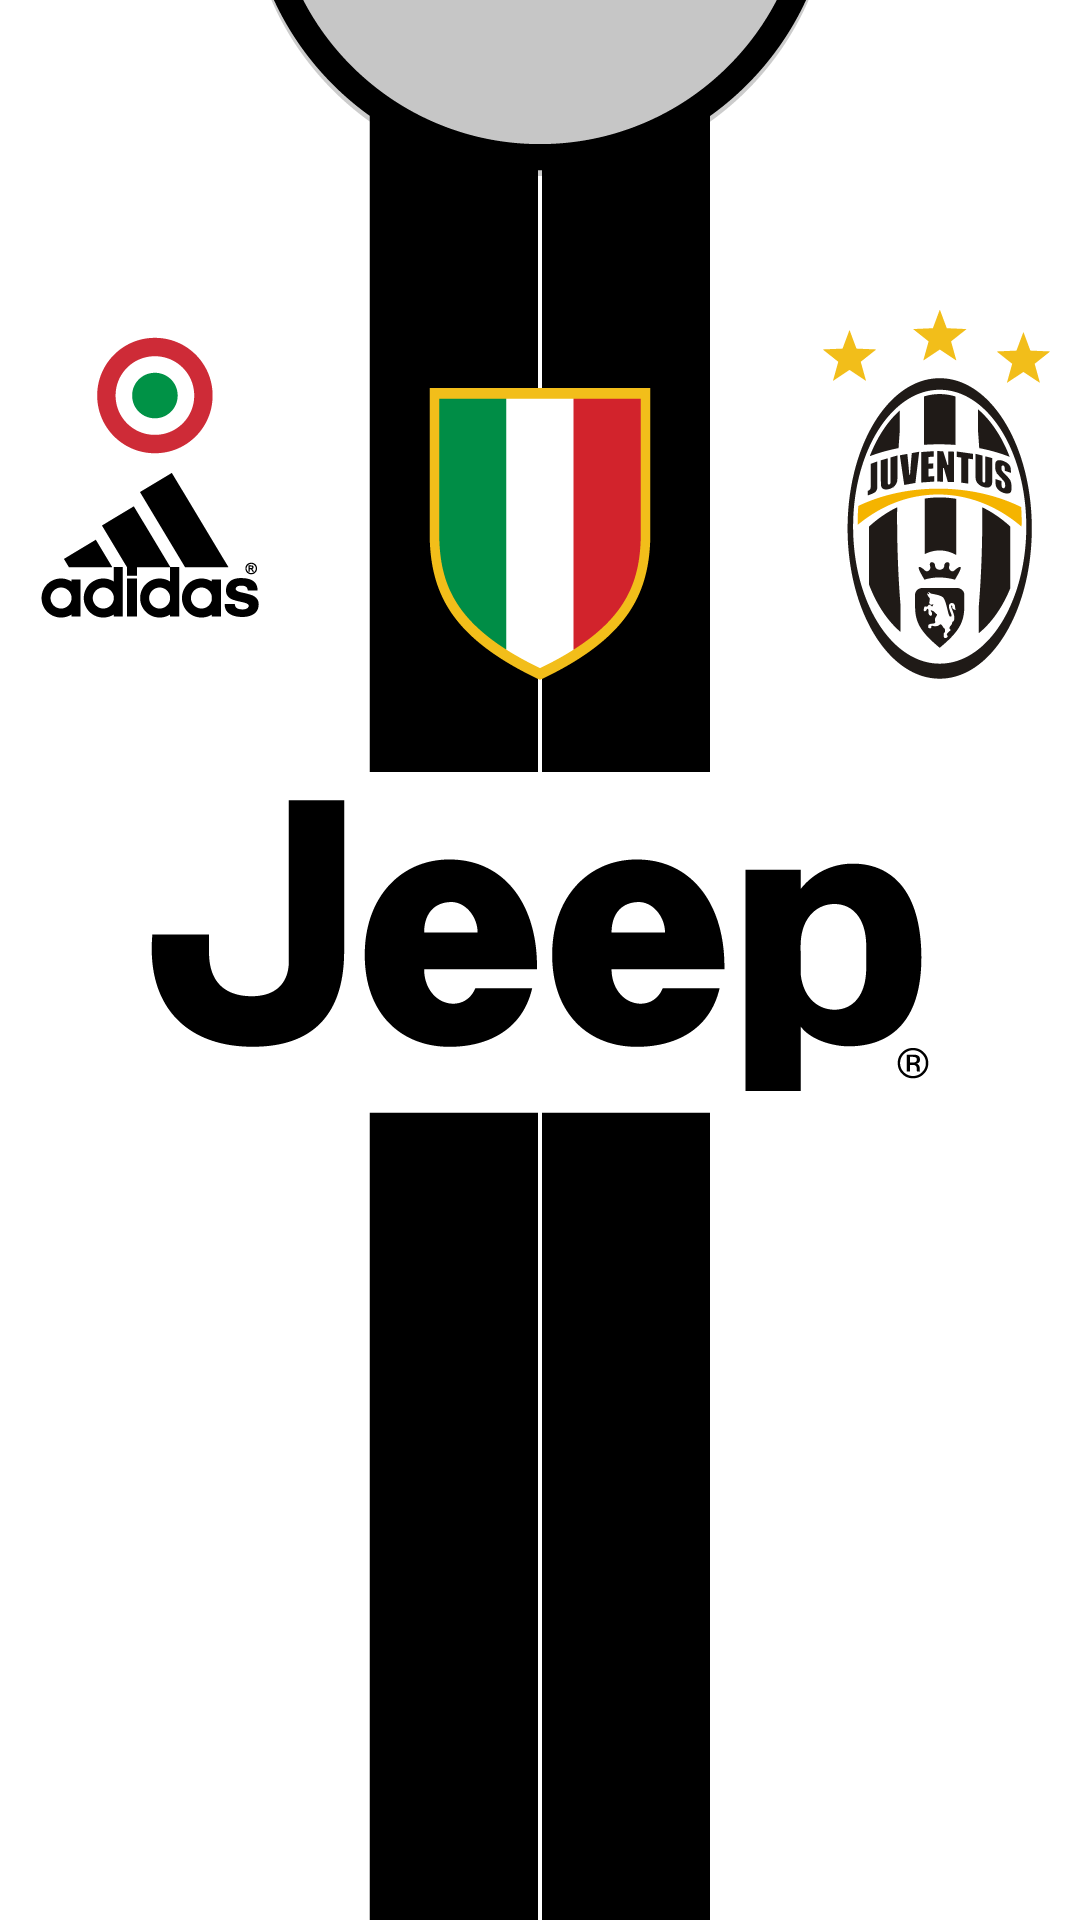 Juventus Wallpaper For iPhone 7 .com